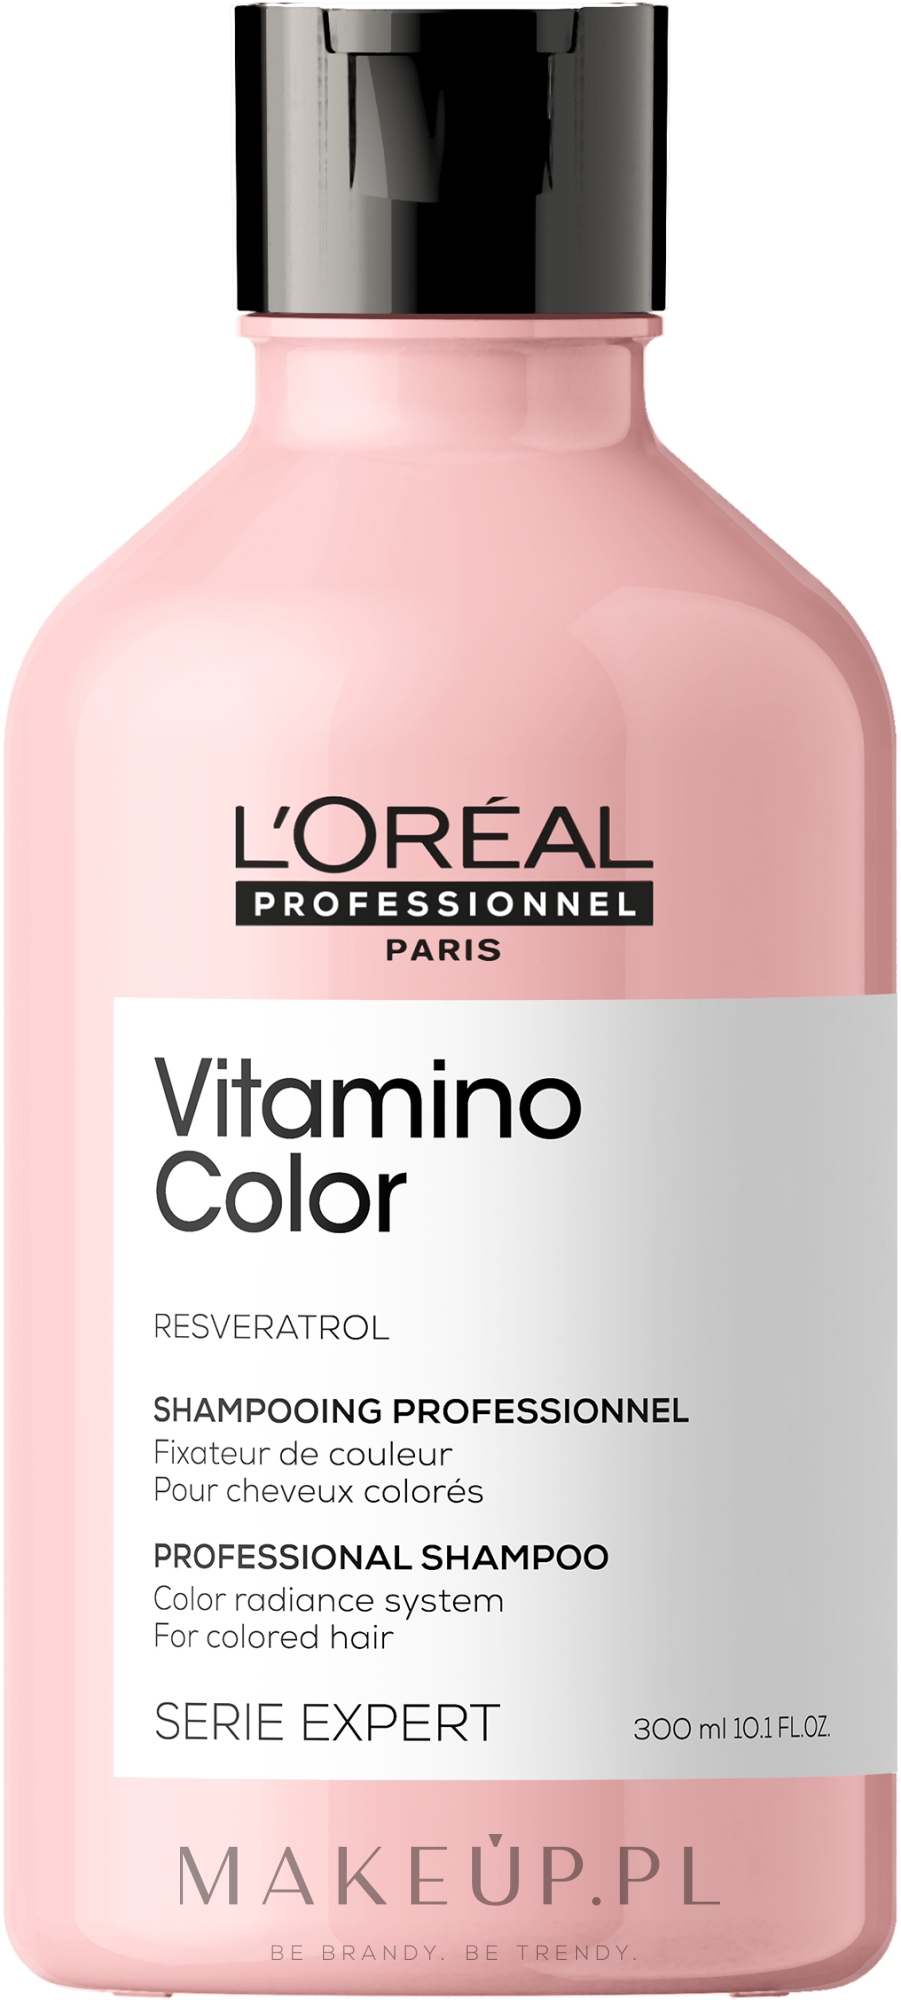 szampony loreal expert szampon witaminowy